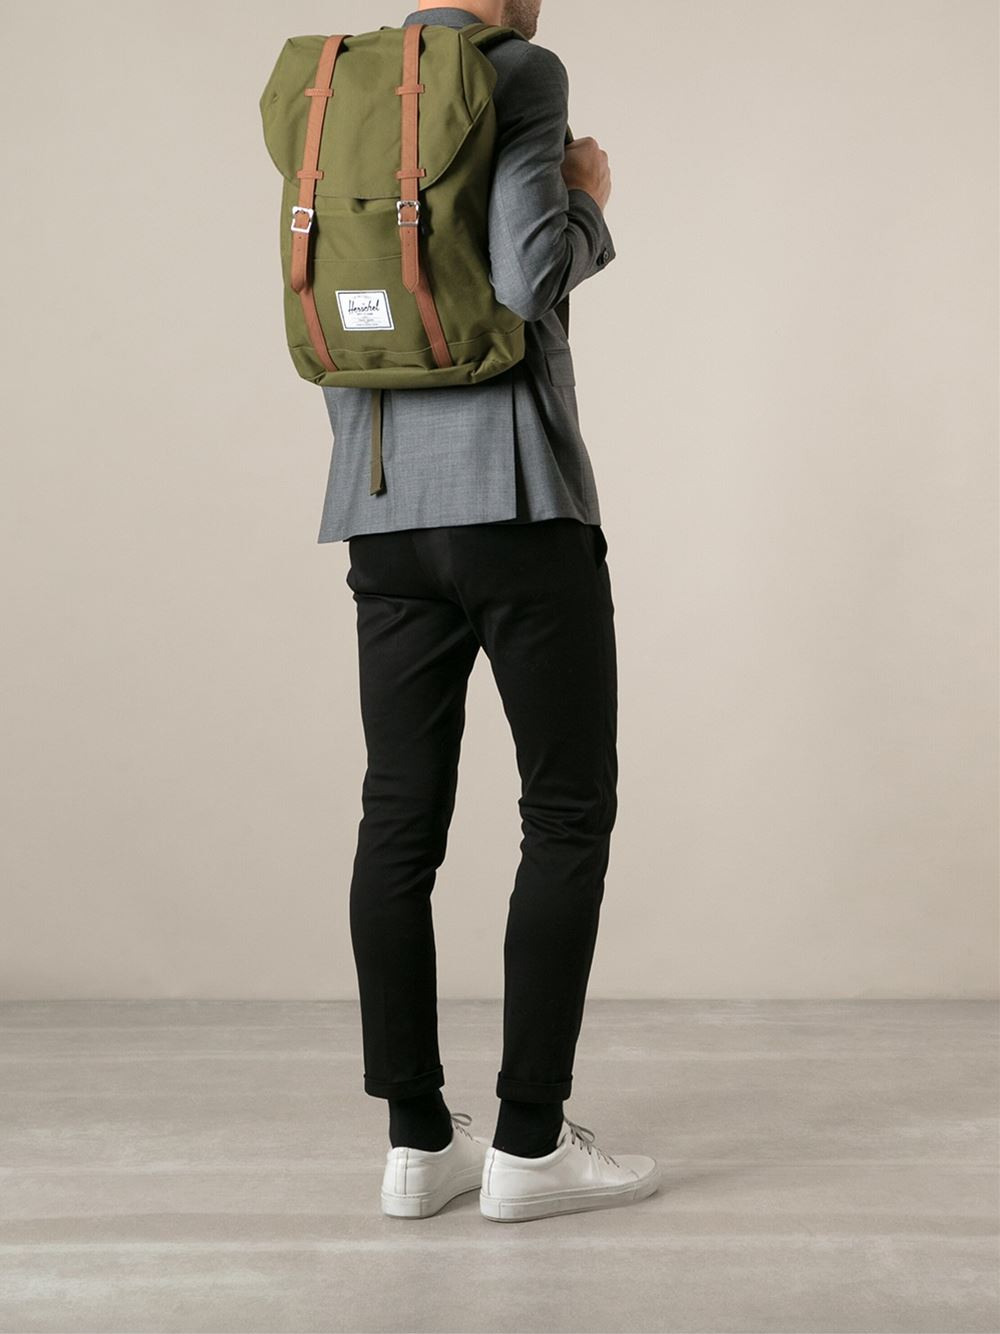 Herschel Supply Co. Mid-volume Little America Backpack in Green for Men -  Lyst